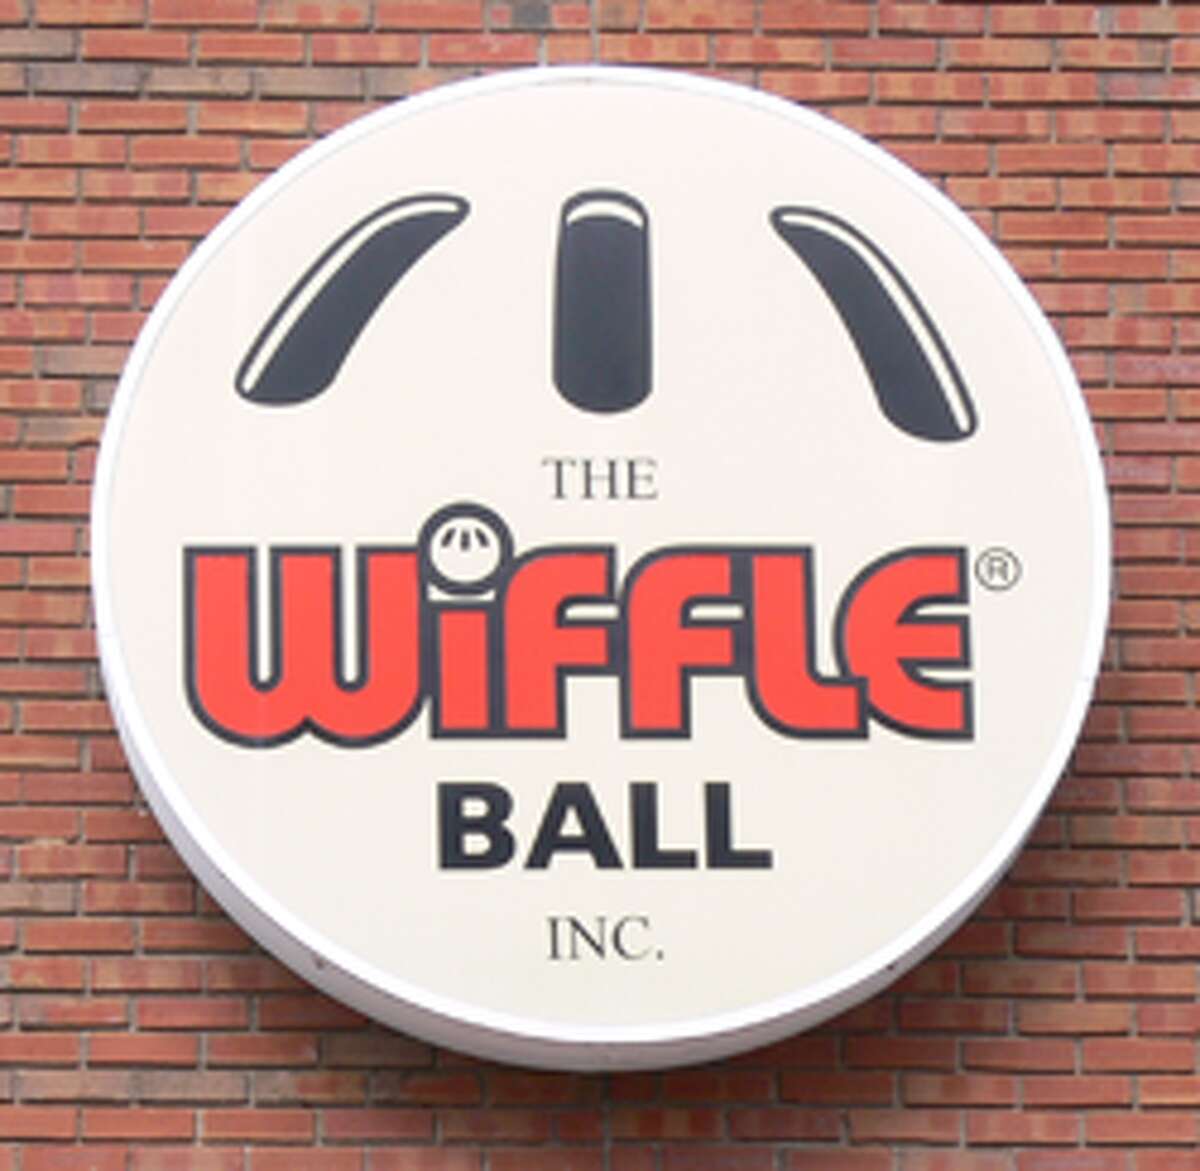 The Wiffle Ball logo on the company’s Bridgeport Avenue factory.